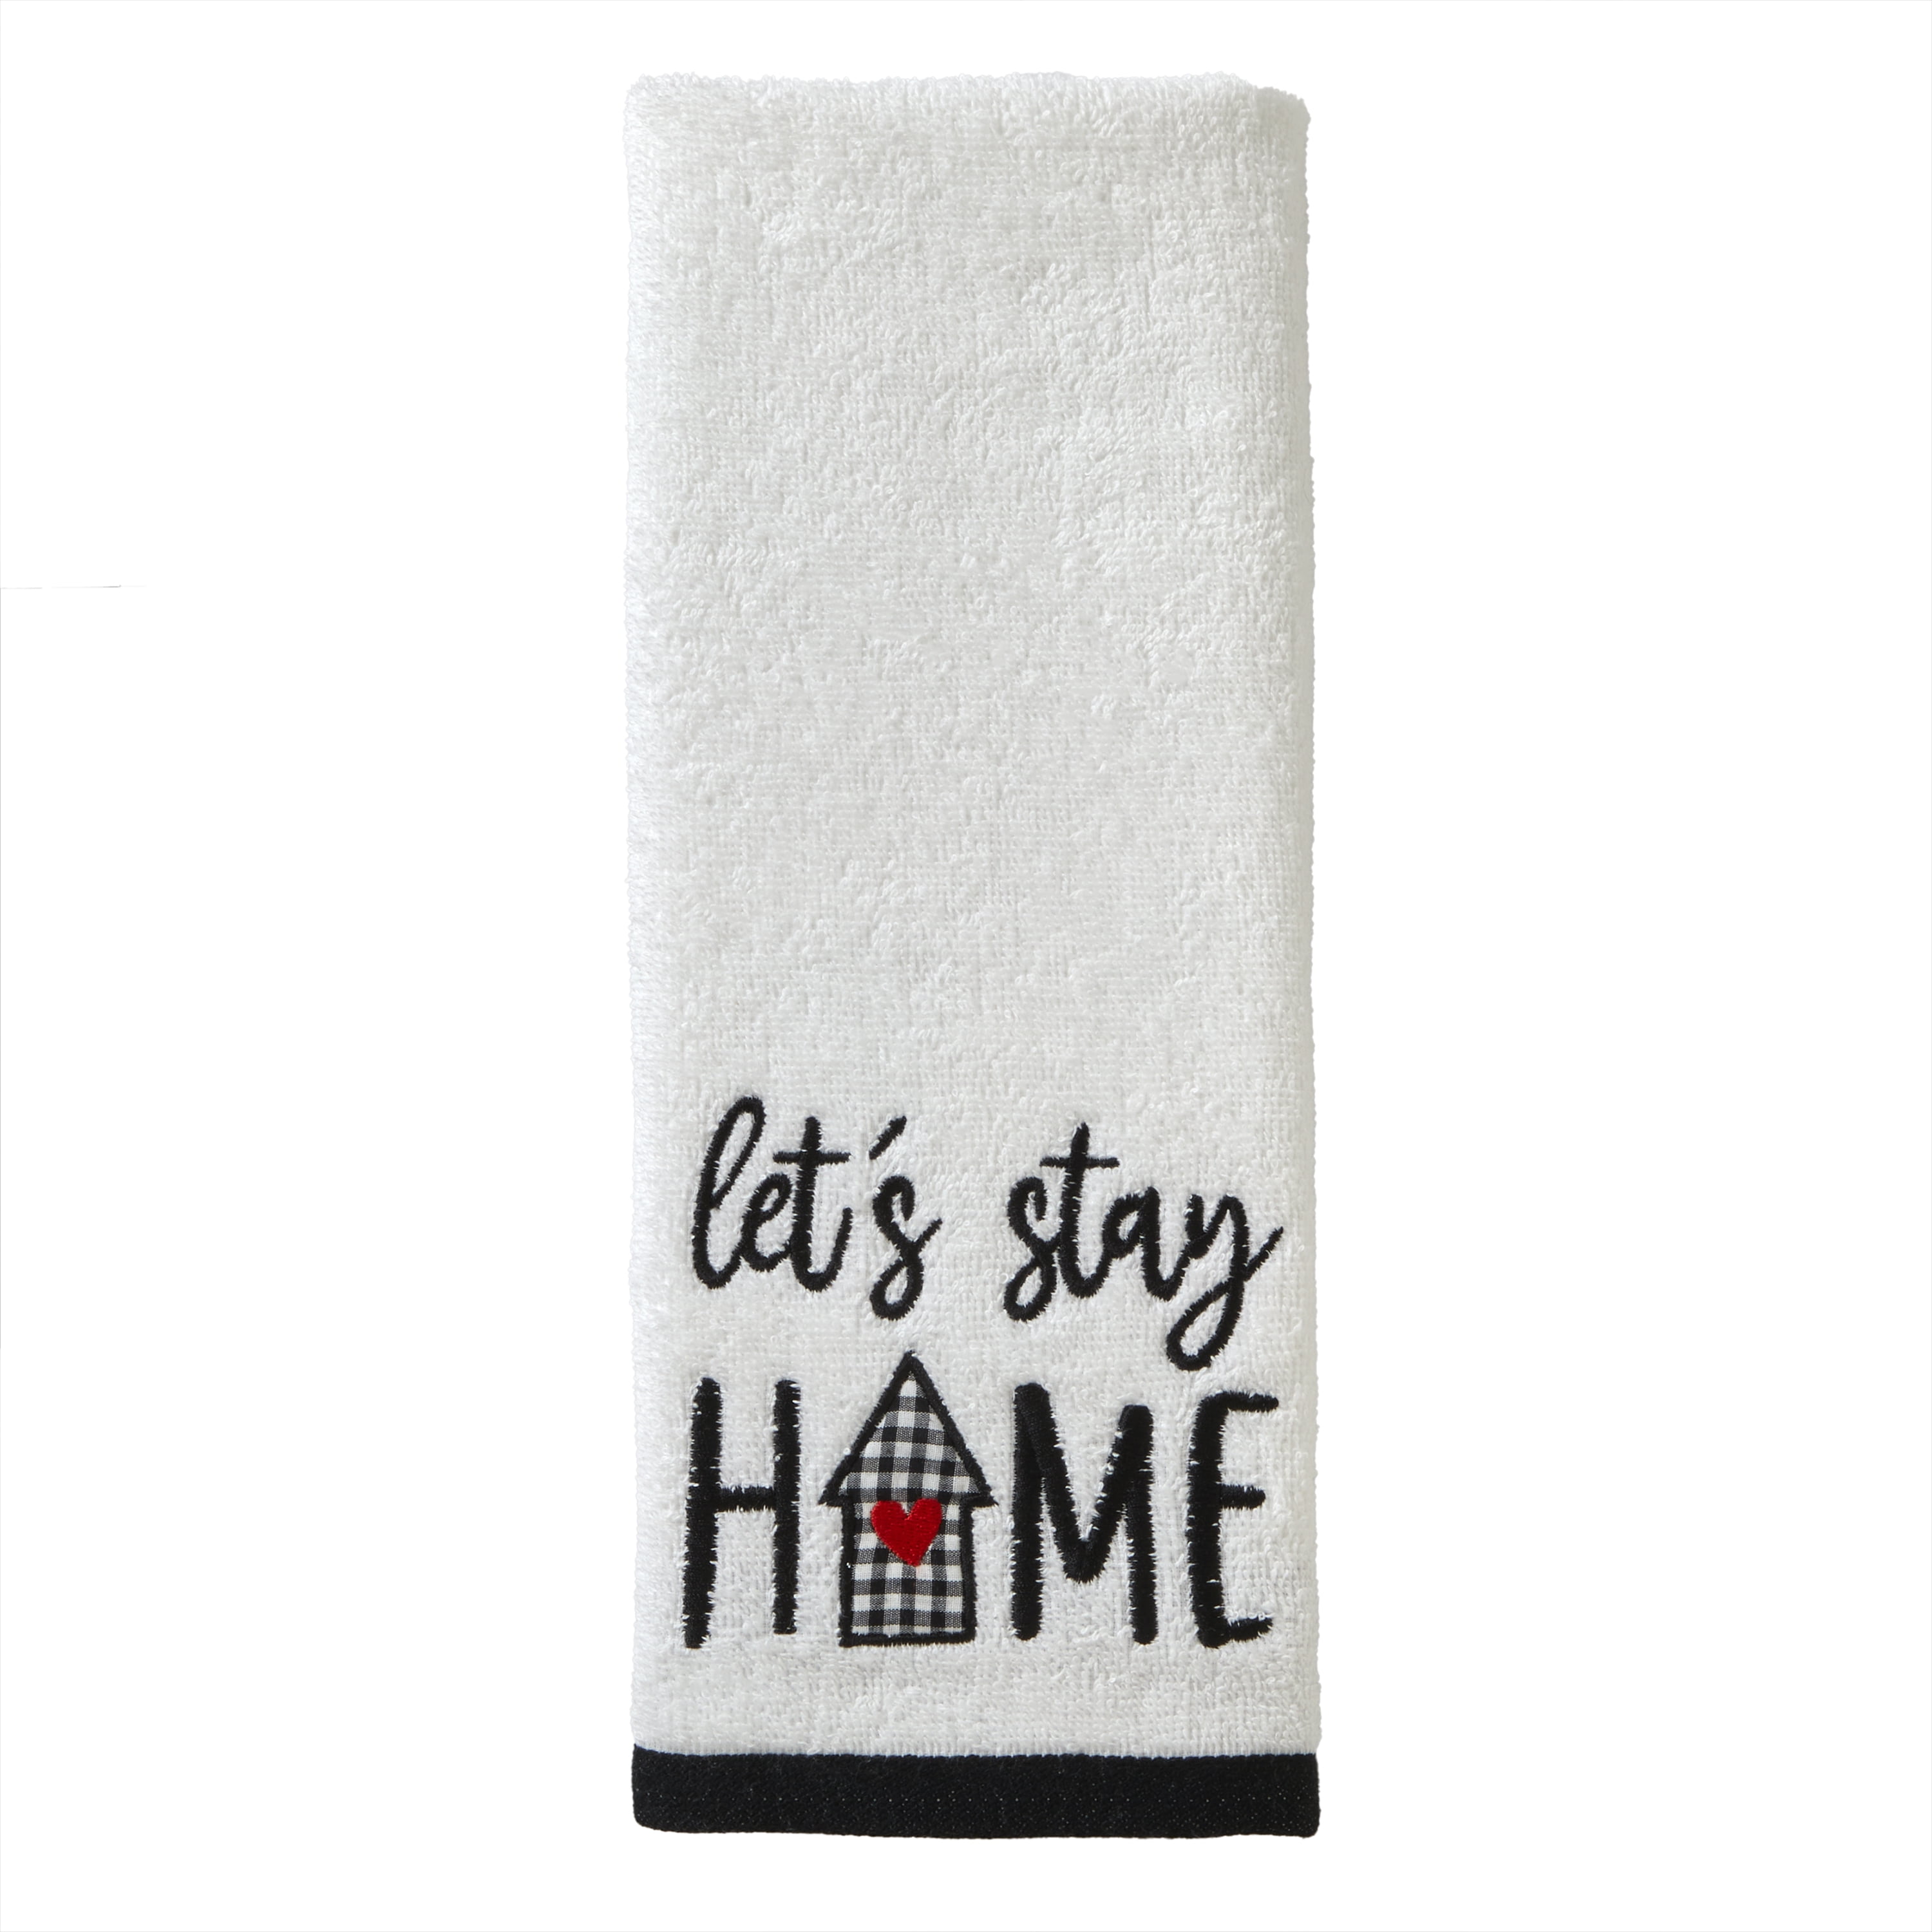 Qilmy Buffalo Plaid Bath Towels Absorbent Bath Towels Set Soft & Comfortable Towel Set for Home Hotel Decor, 3 Piece